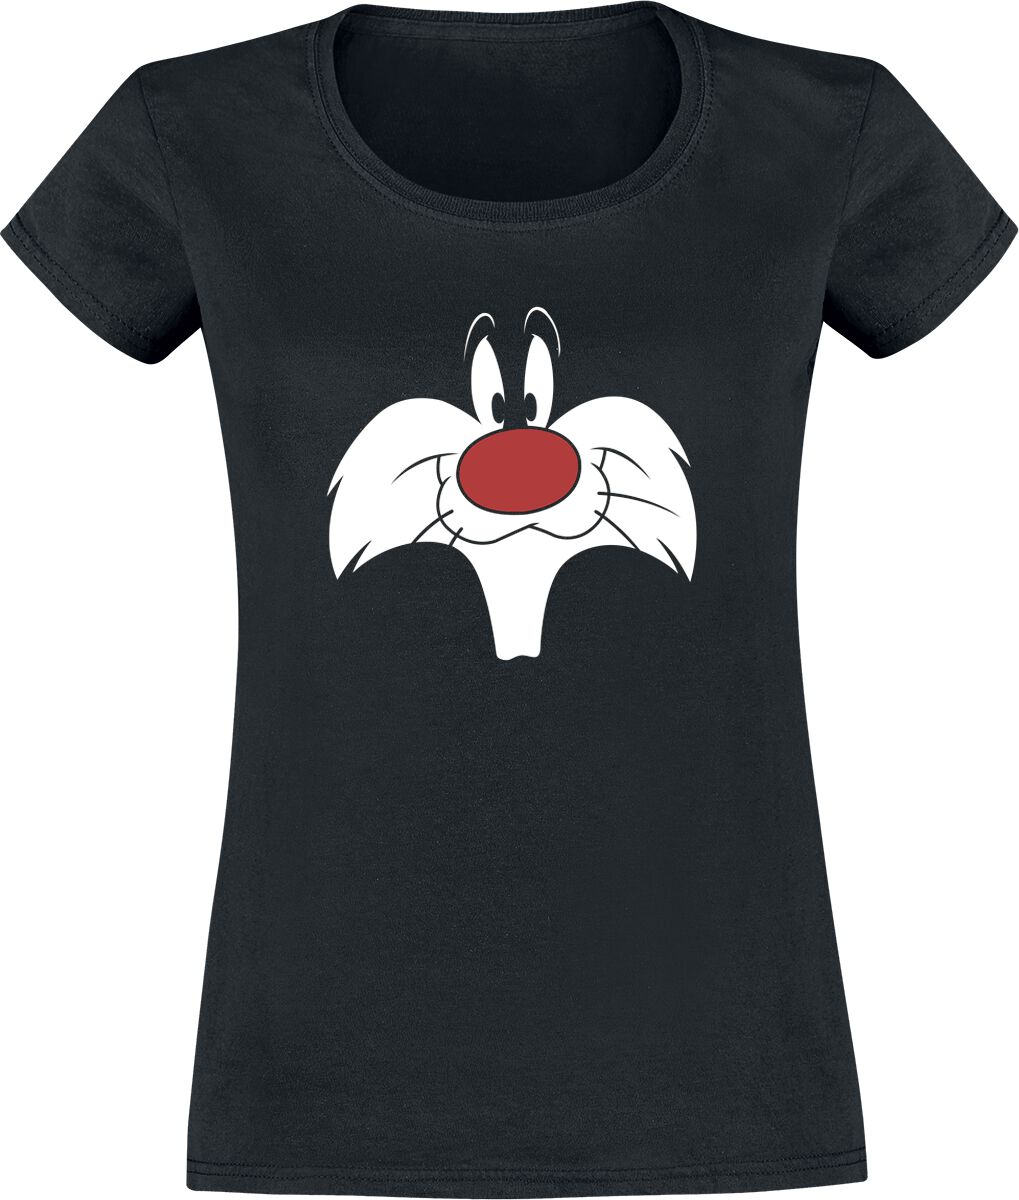 Looney Tunes Sylvester - Big Face T-Shirt black